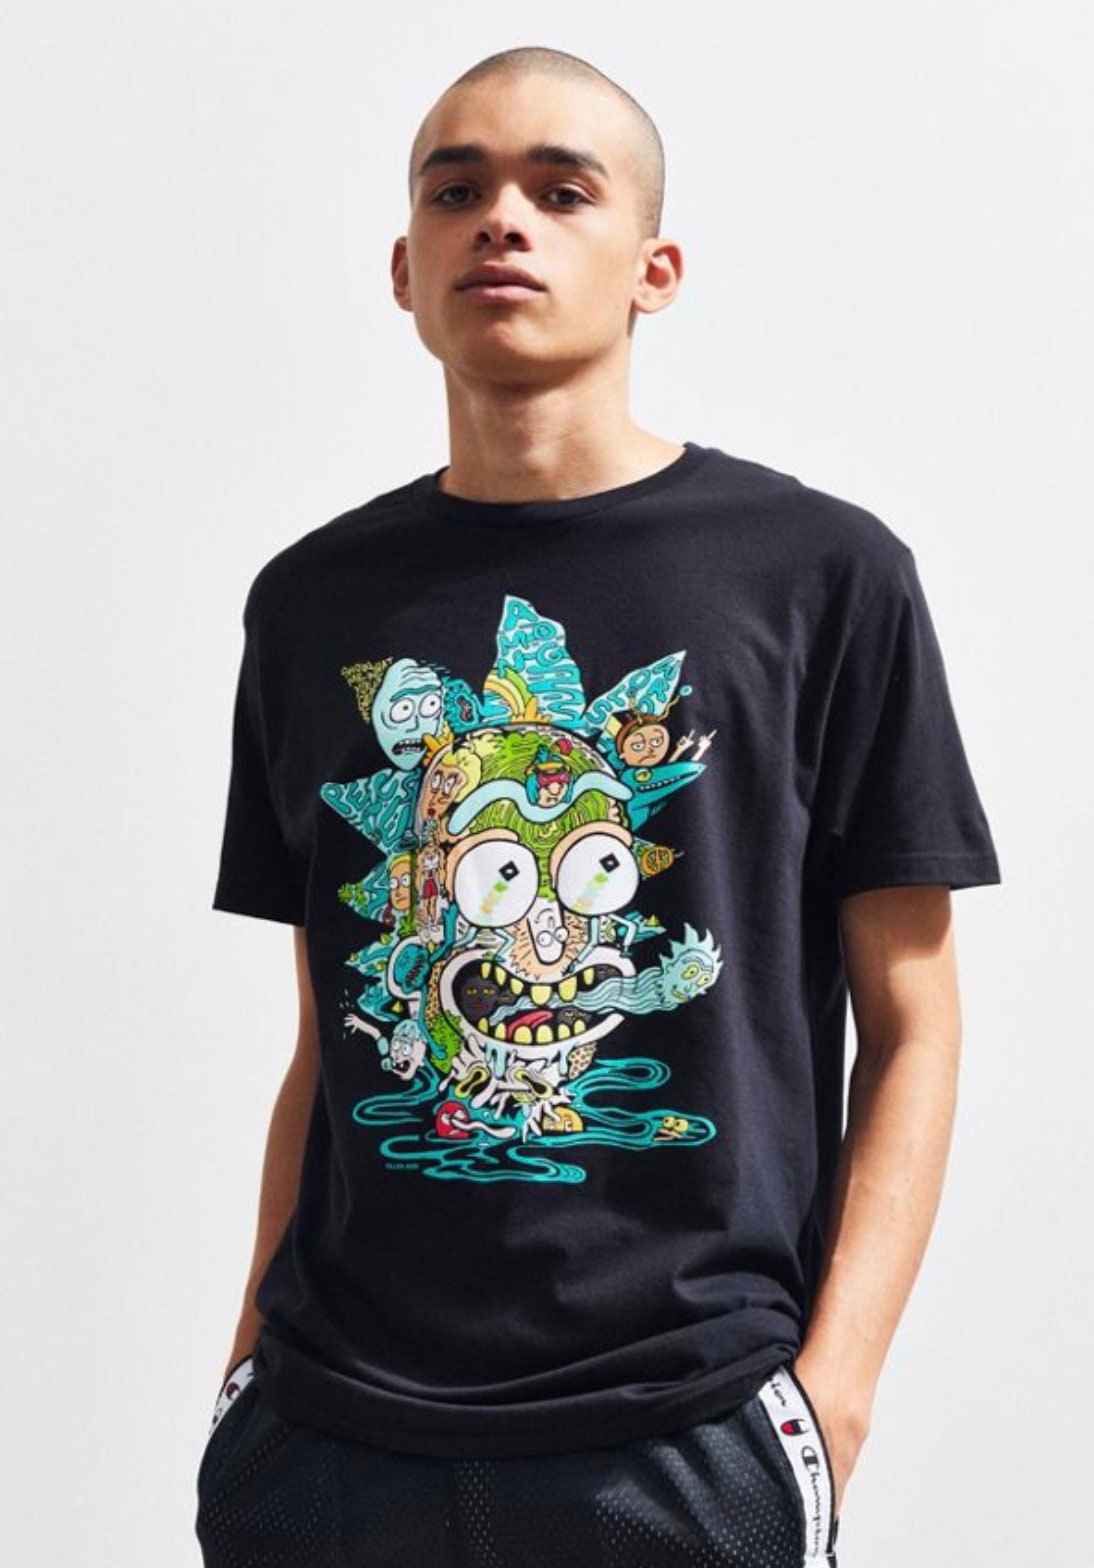 Killer Acid x Rick and Morty Official T-shirt